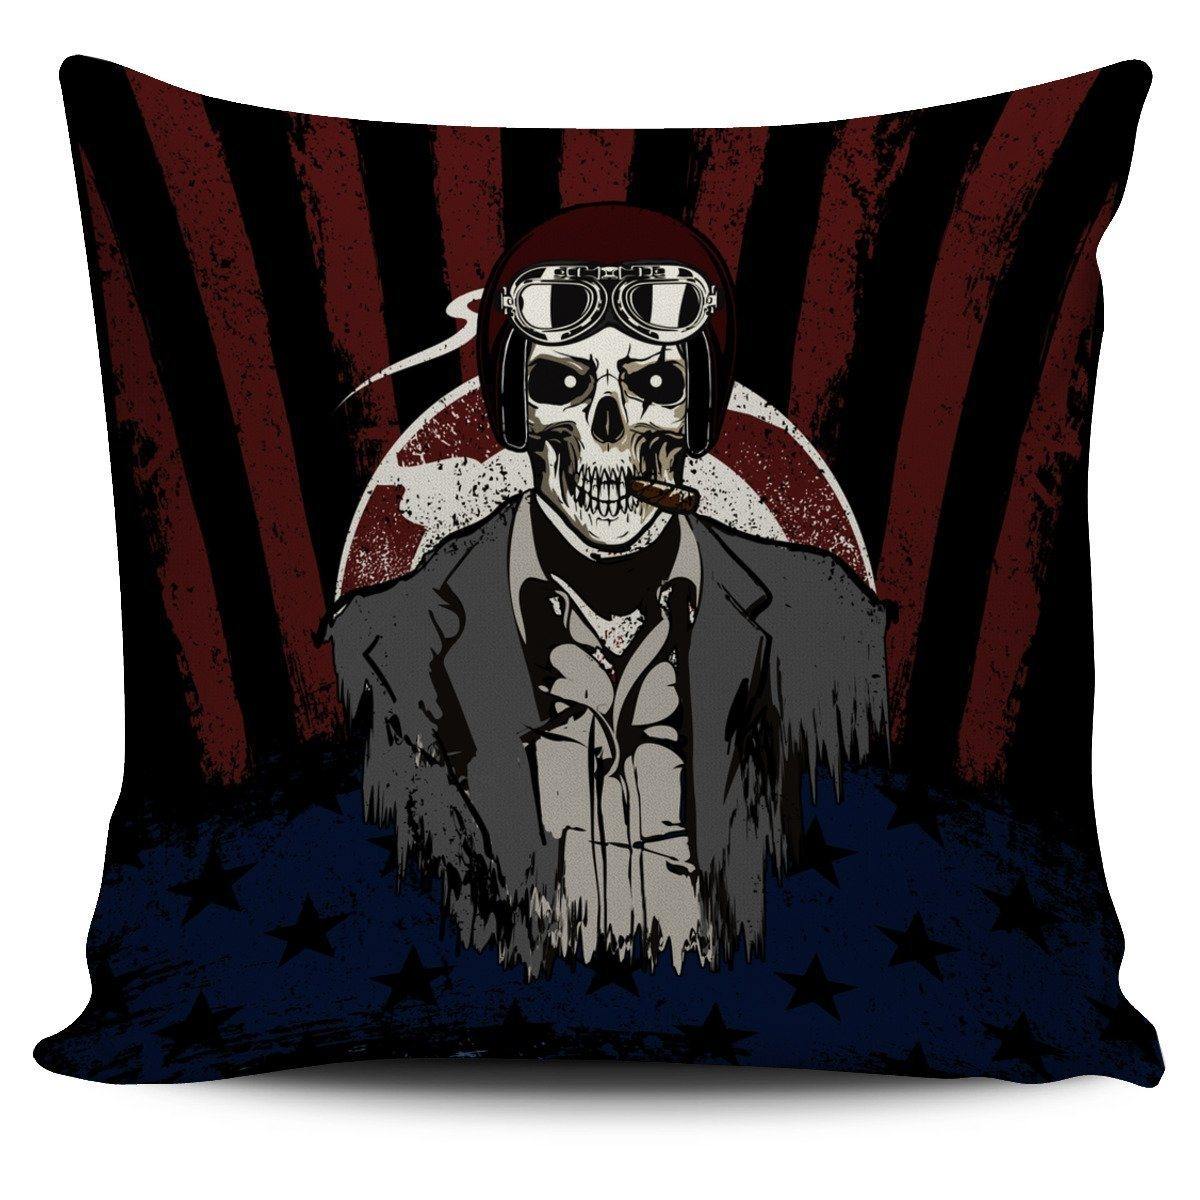 USA Skull Pillow Cover - American Legend Rider